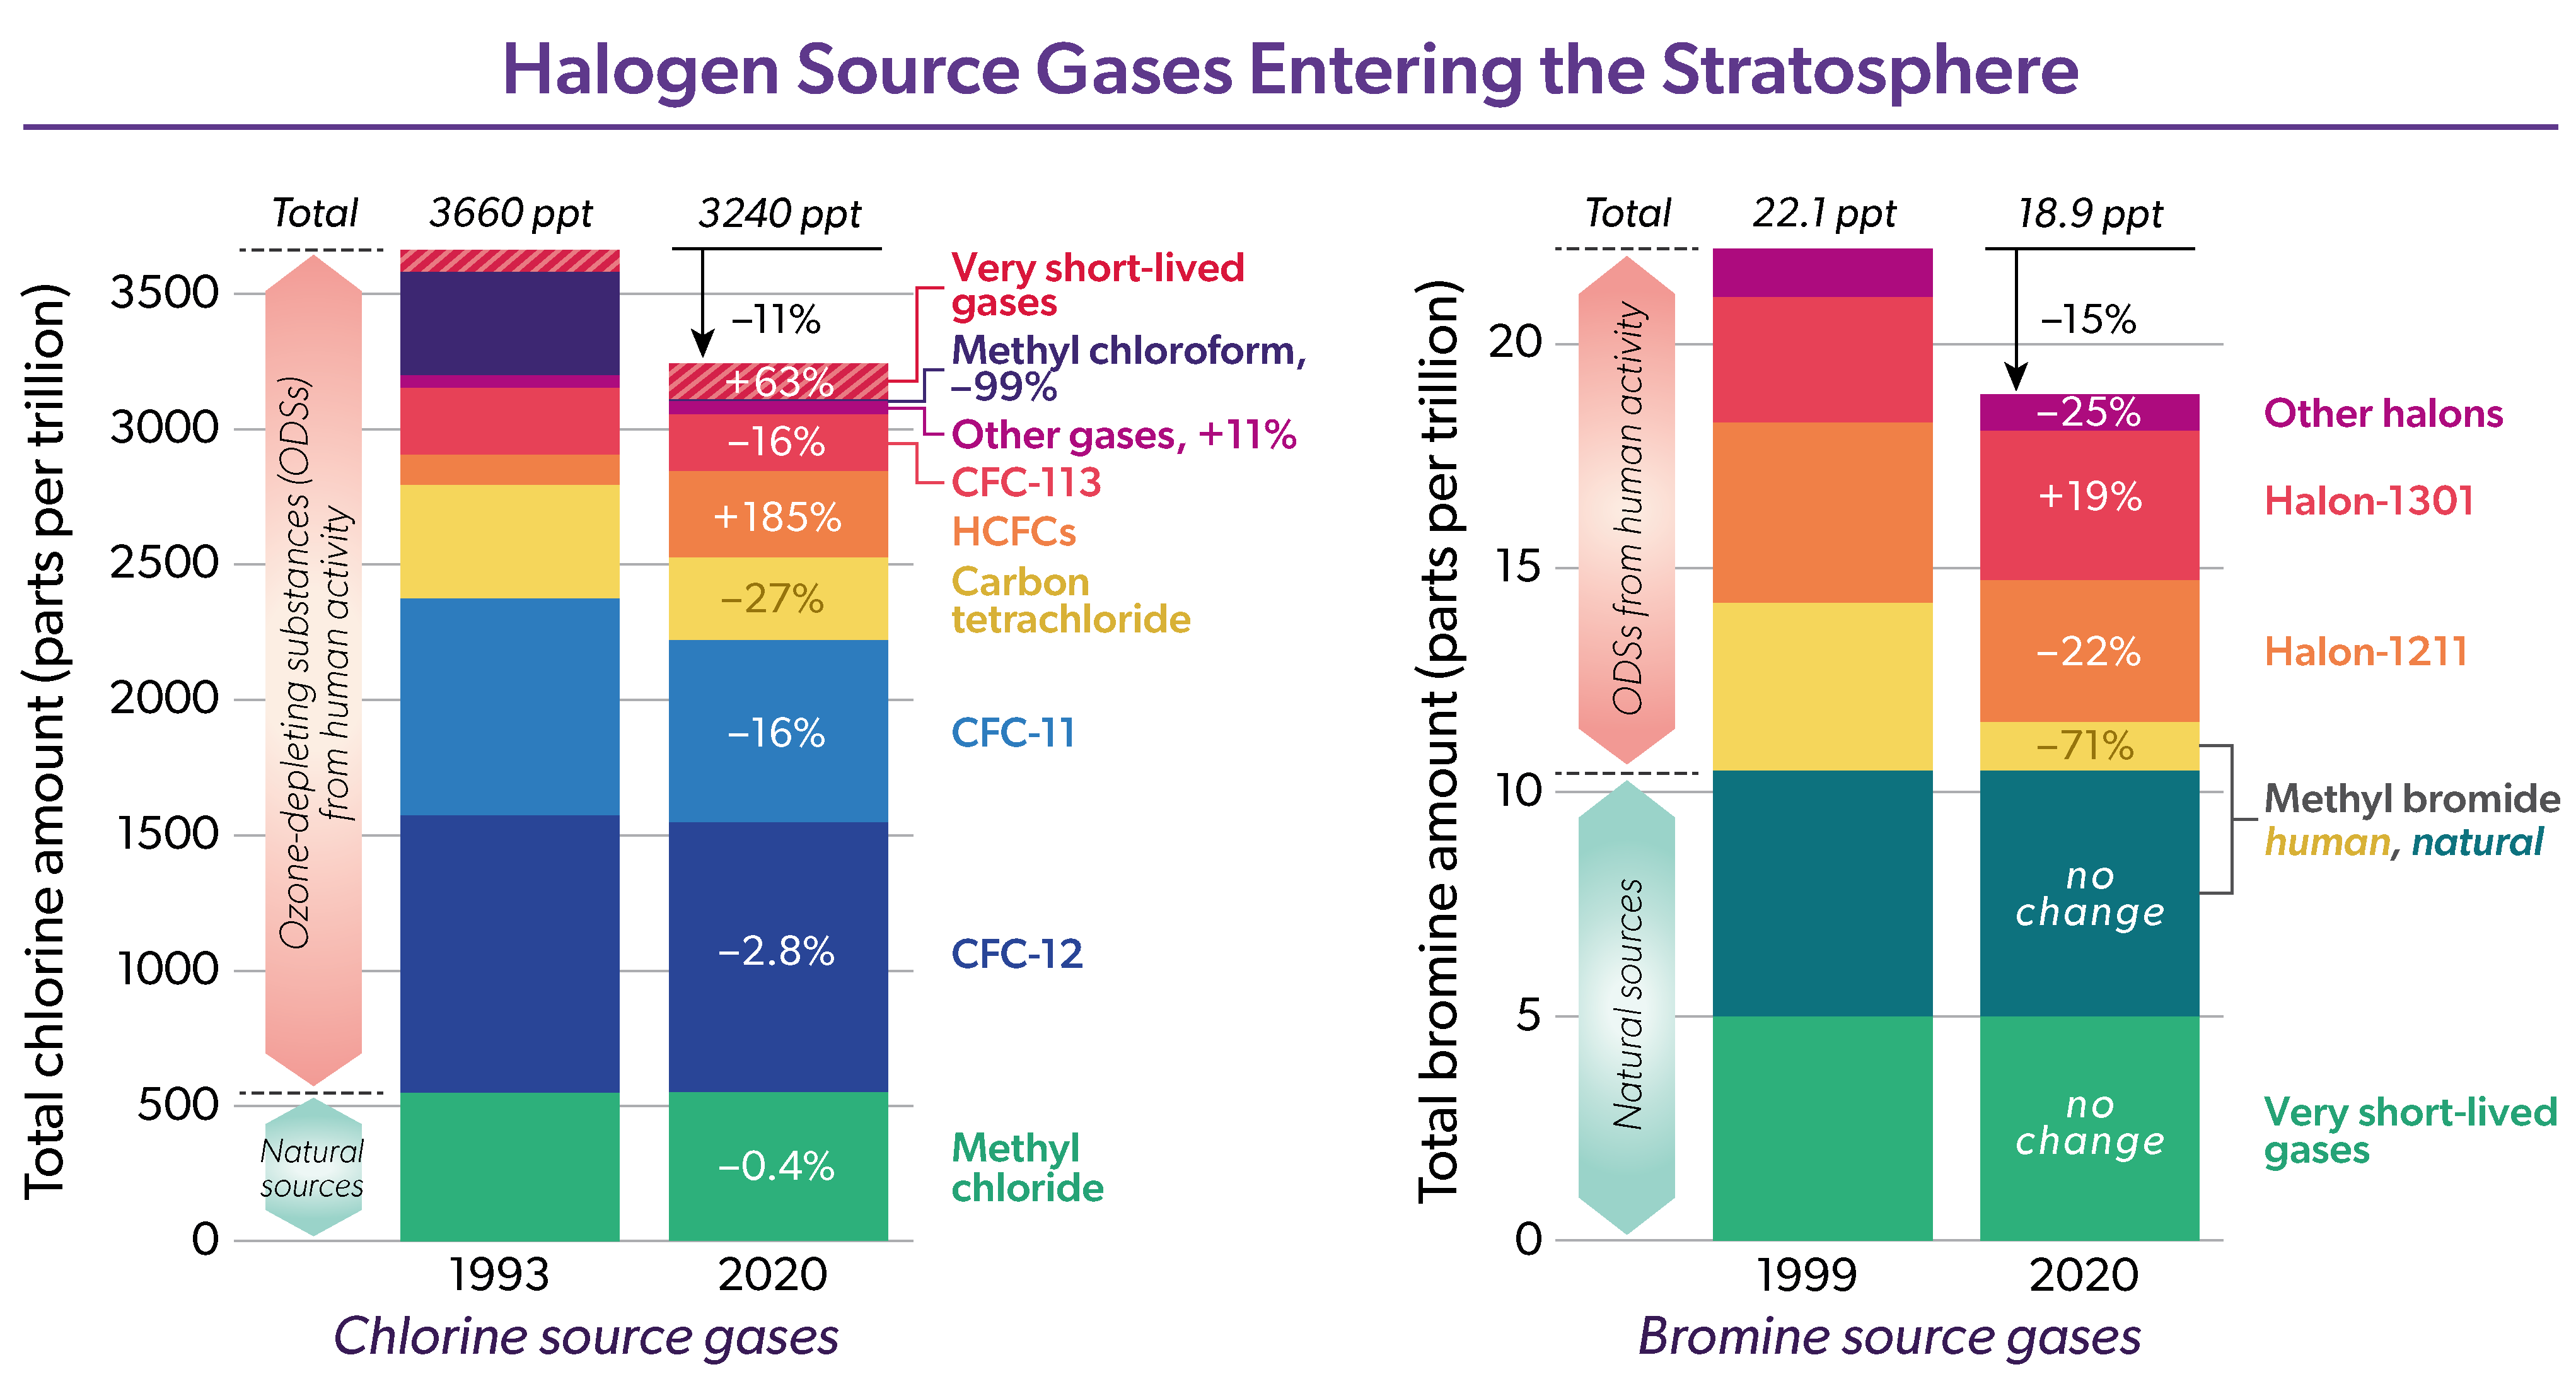 Halogen Source Gases Entering the Stratosphere